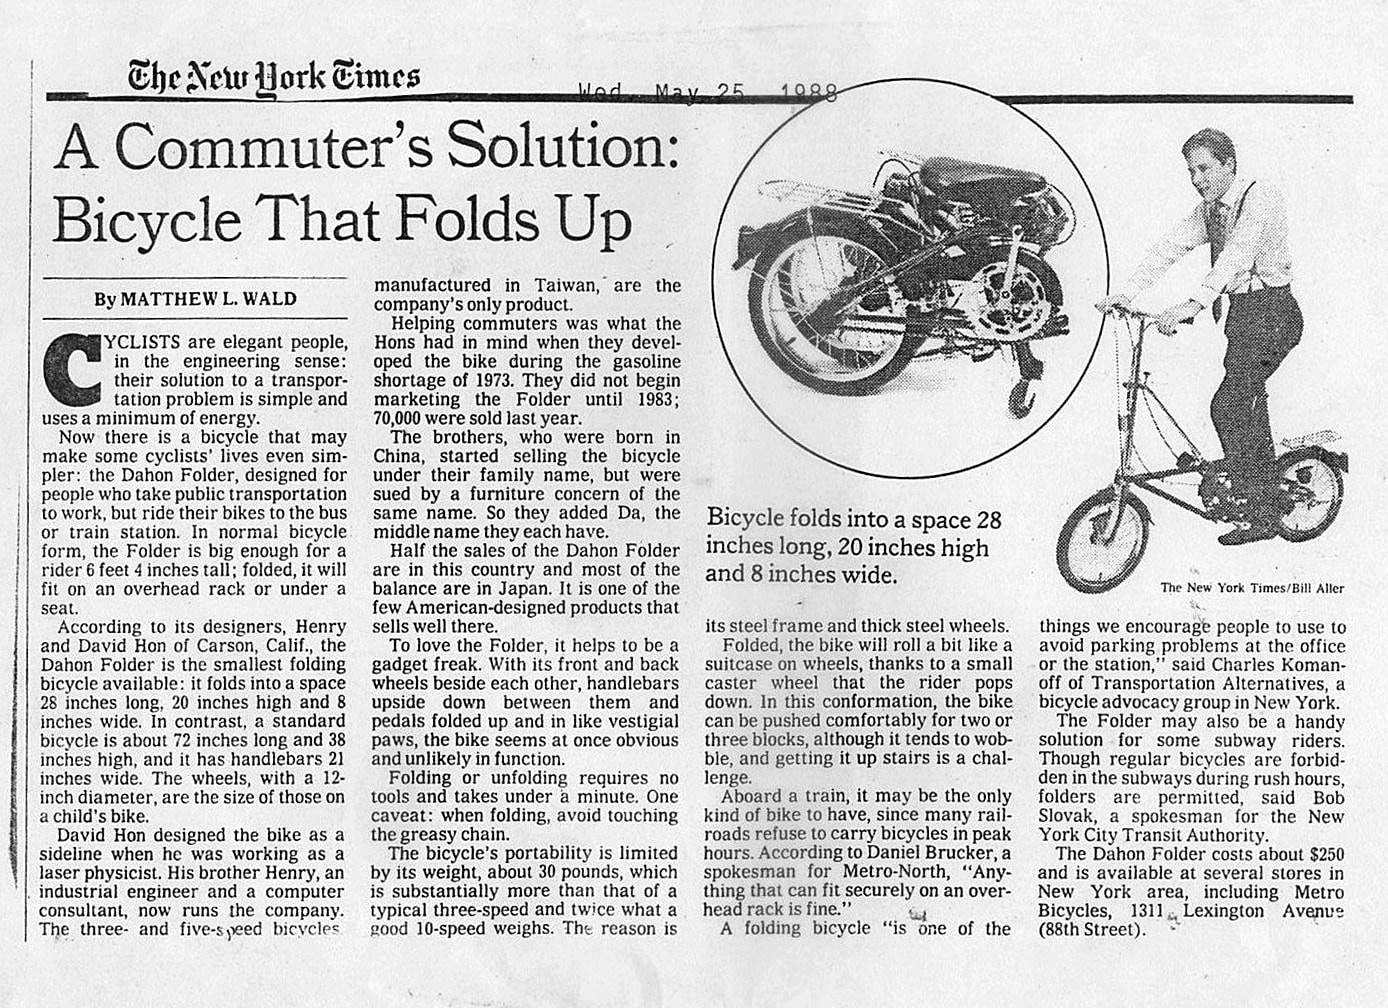 dahon-New-York-Times-1988-min